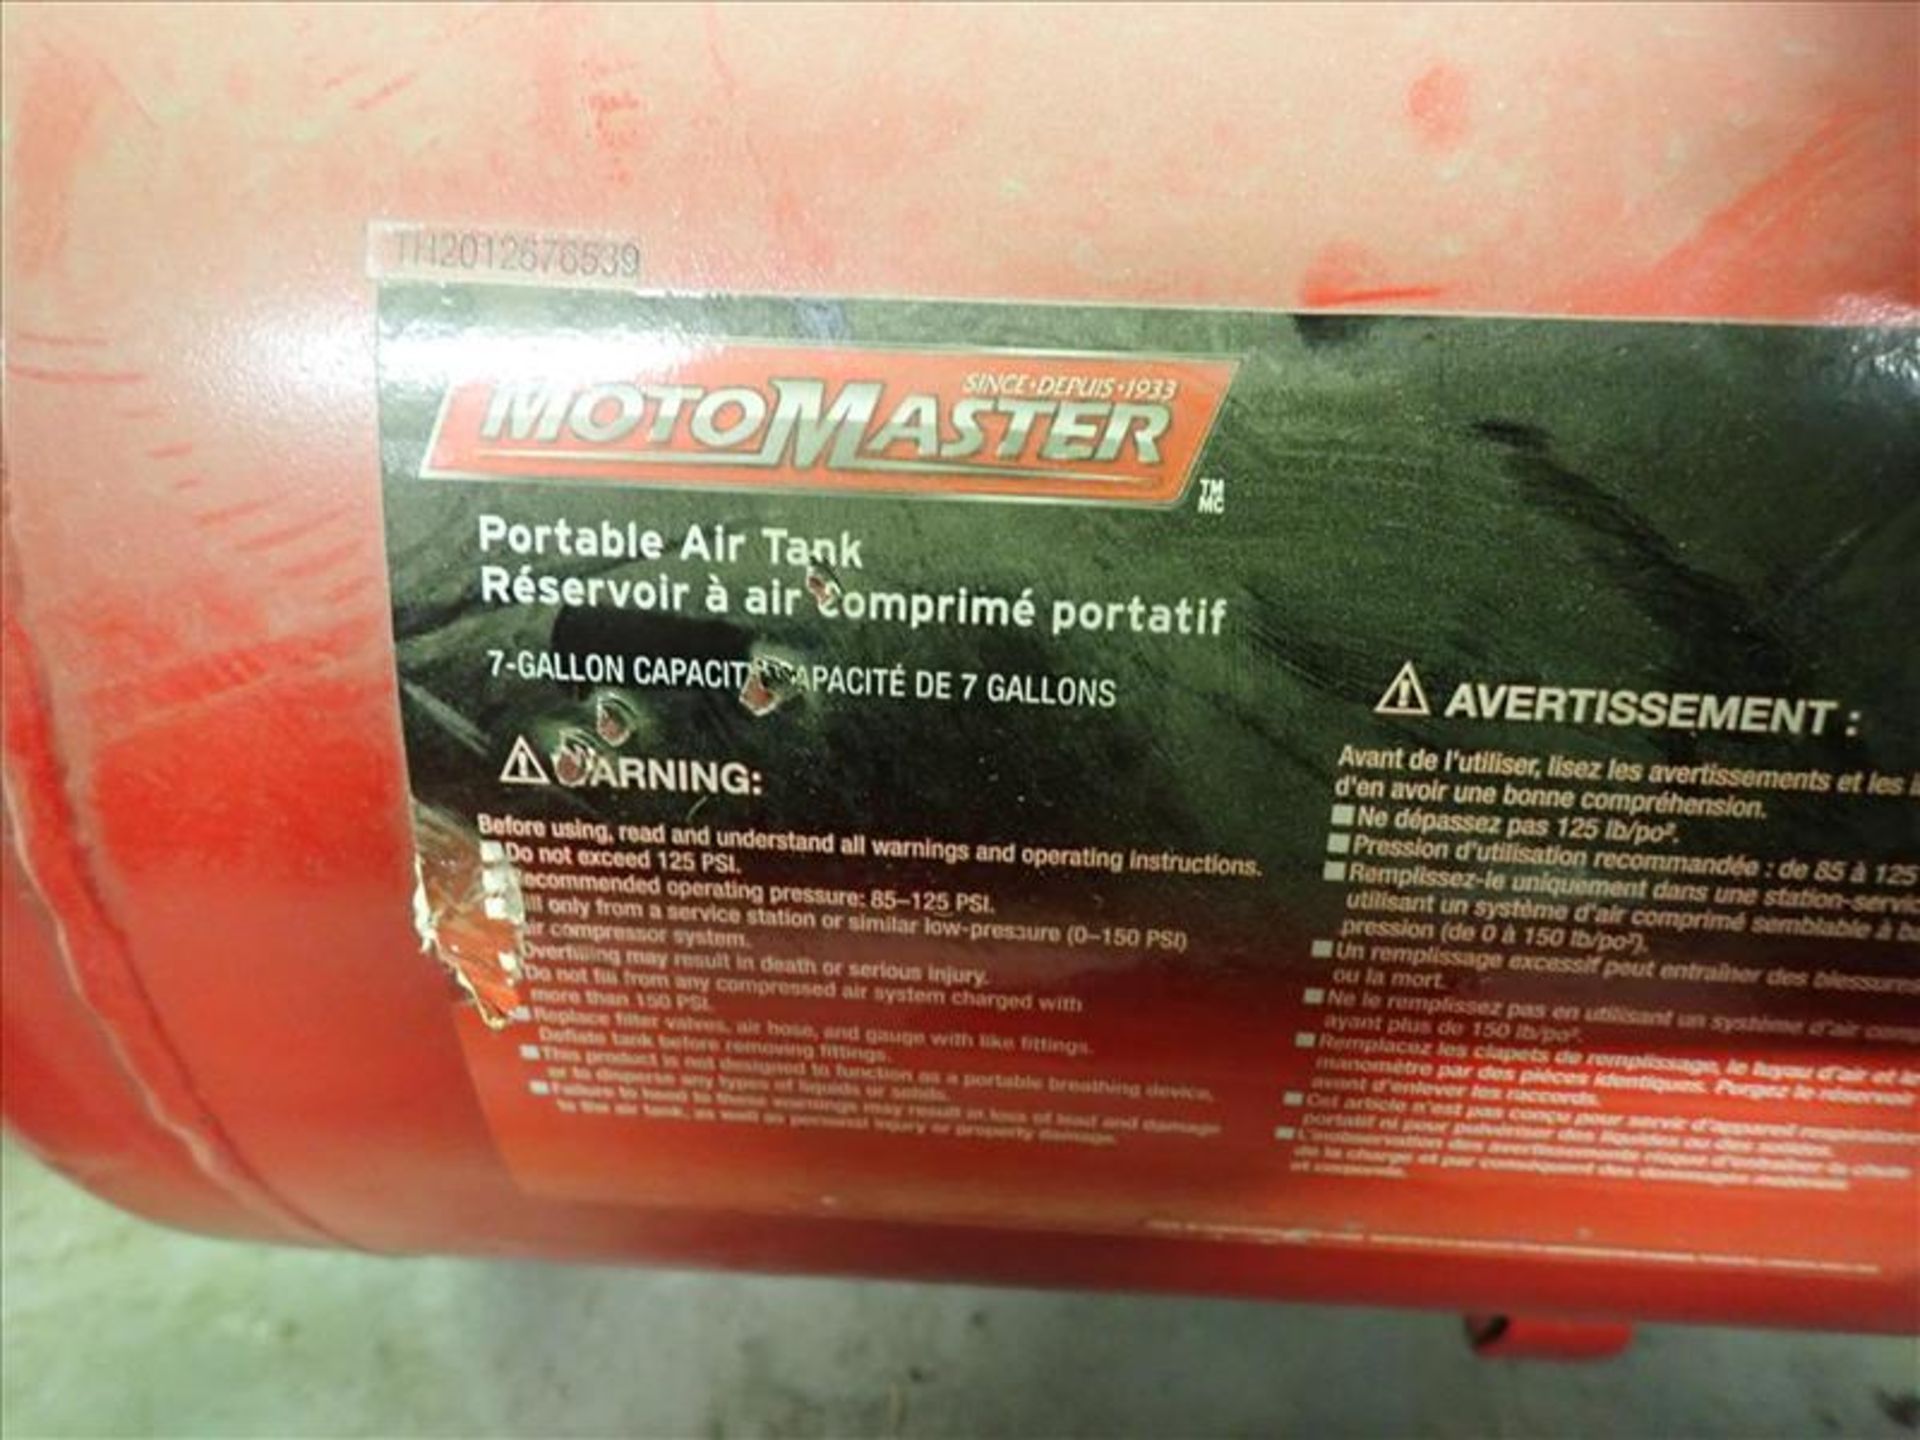 MotorMaster Portable Air Tank, 7 Gallon capacity - Image 2 of 2